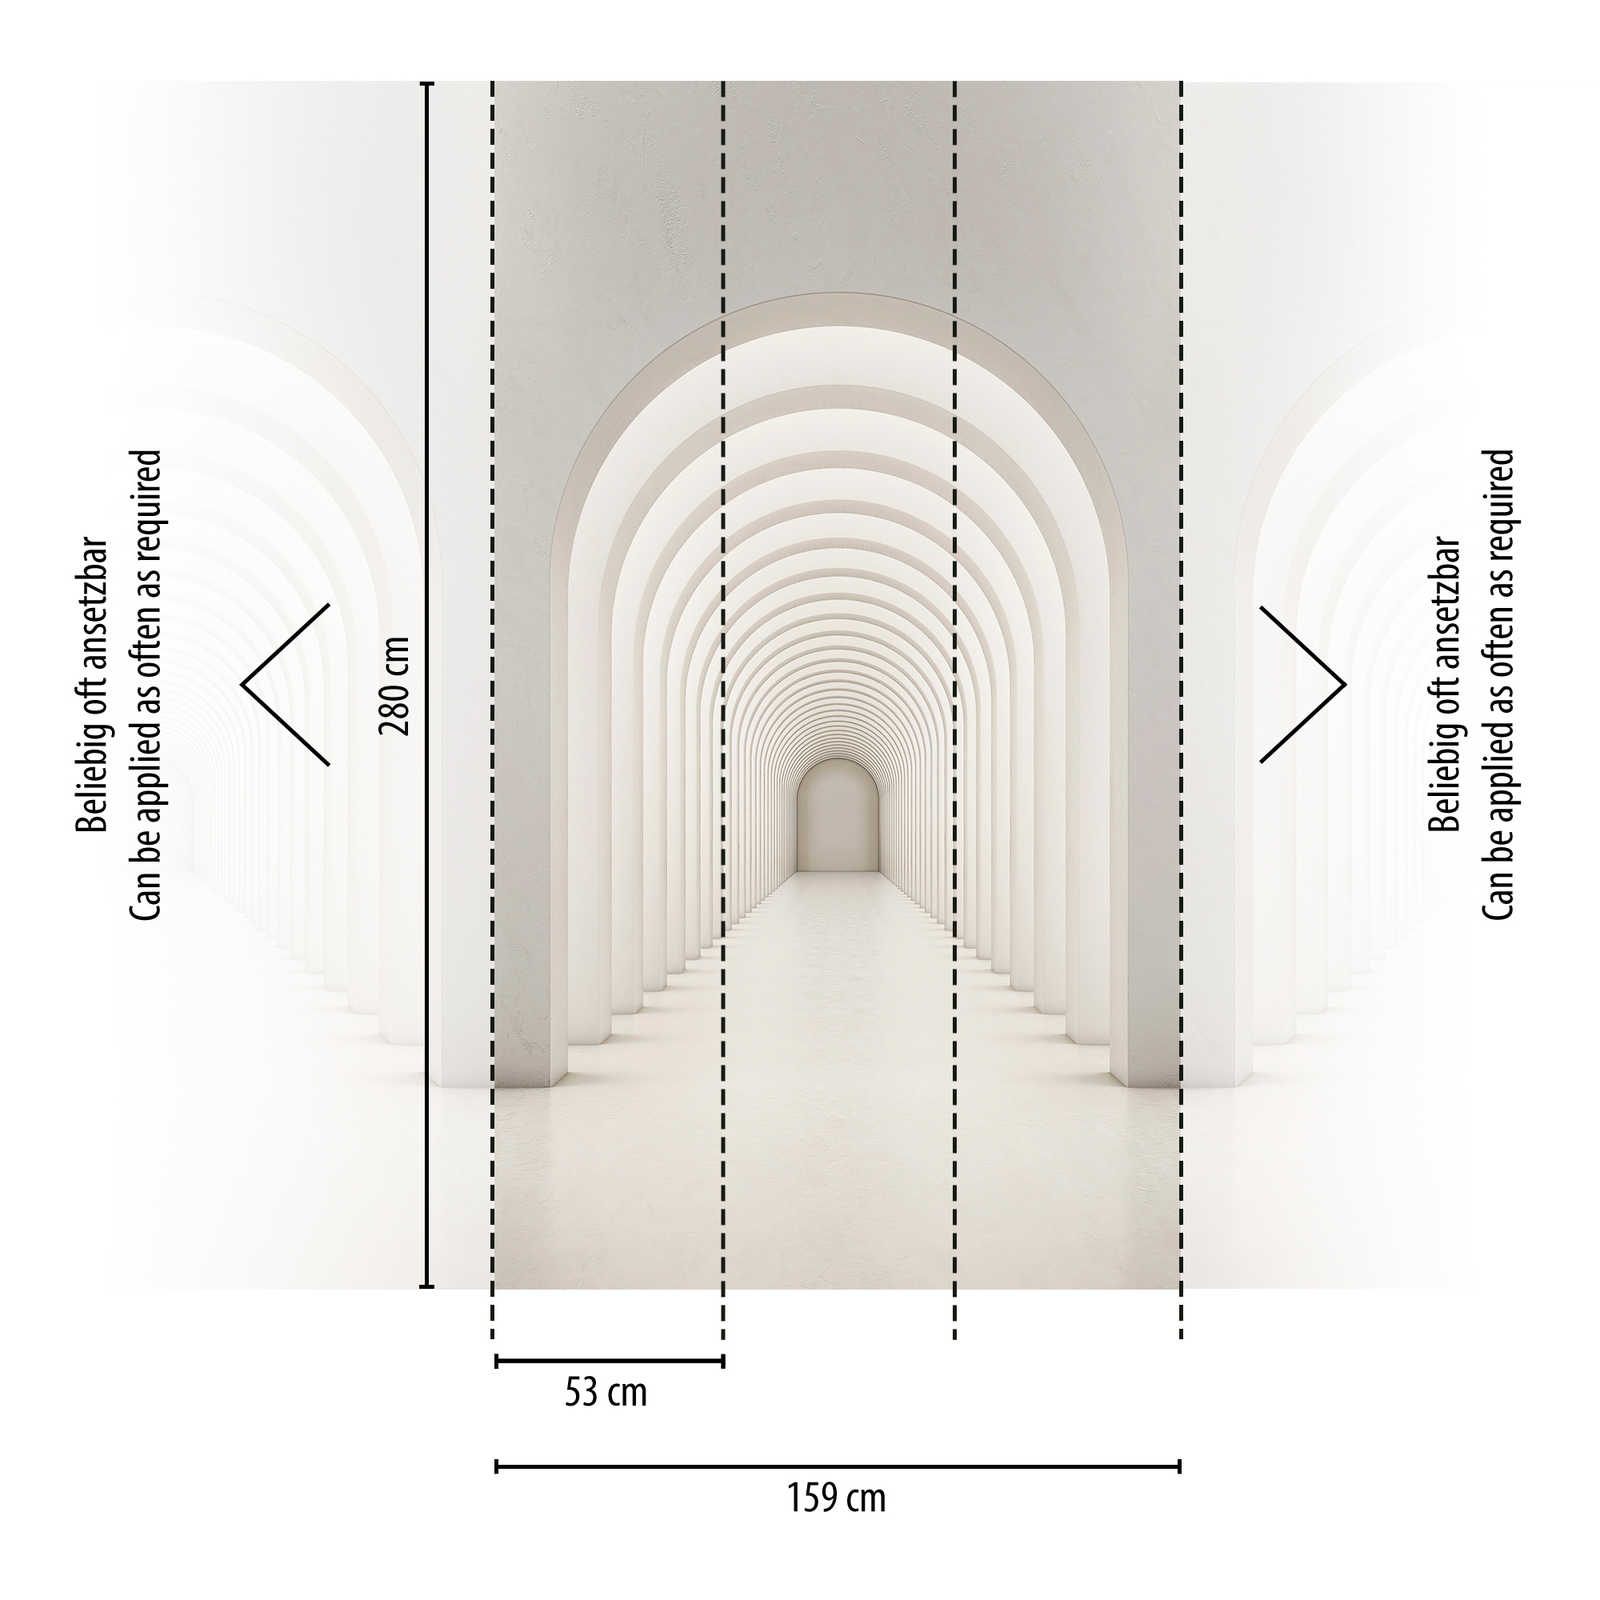             Wallpaper novelty - 3D motif wallpaper round arch modern architecture
        